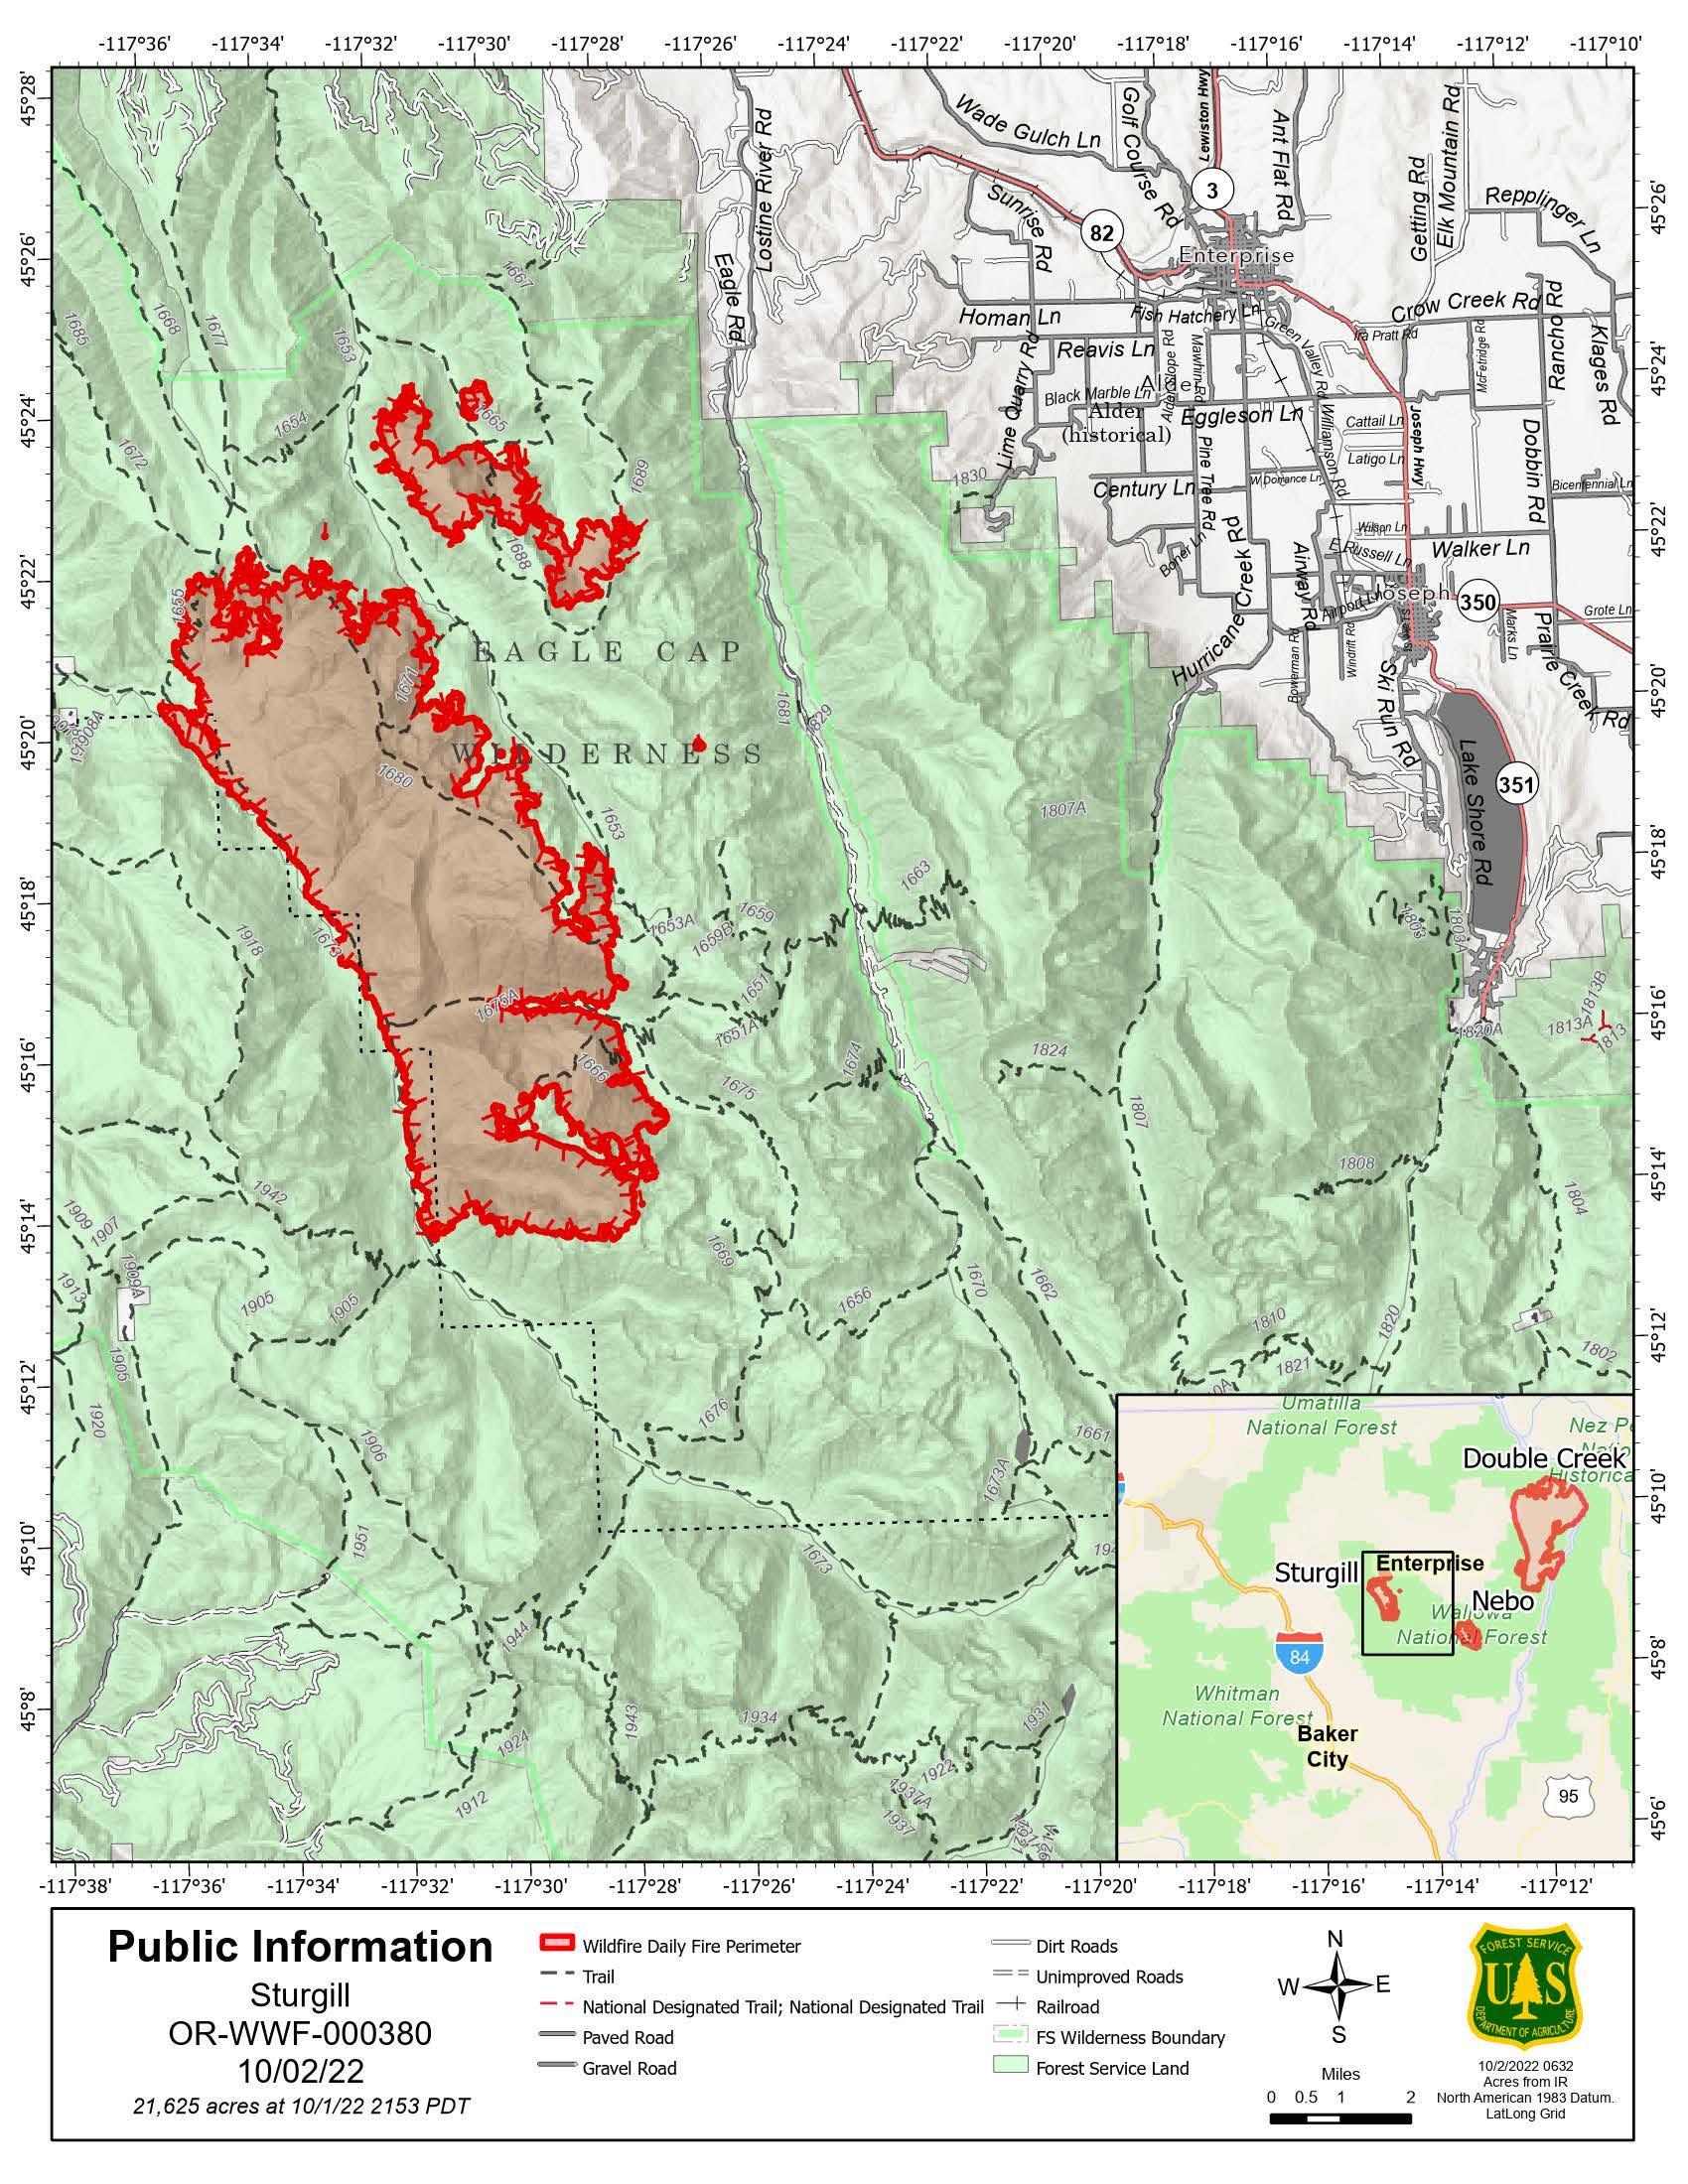 Sturgill Fire Map - 20221002